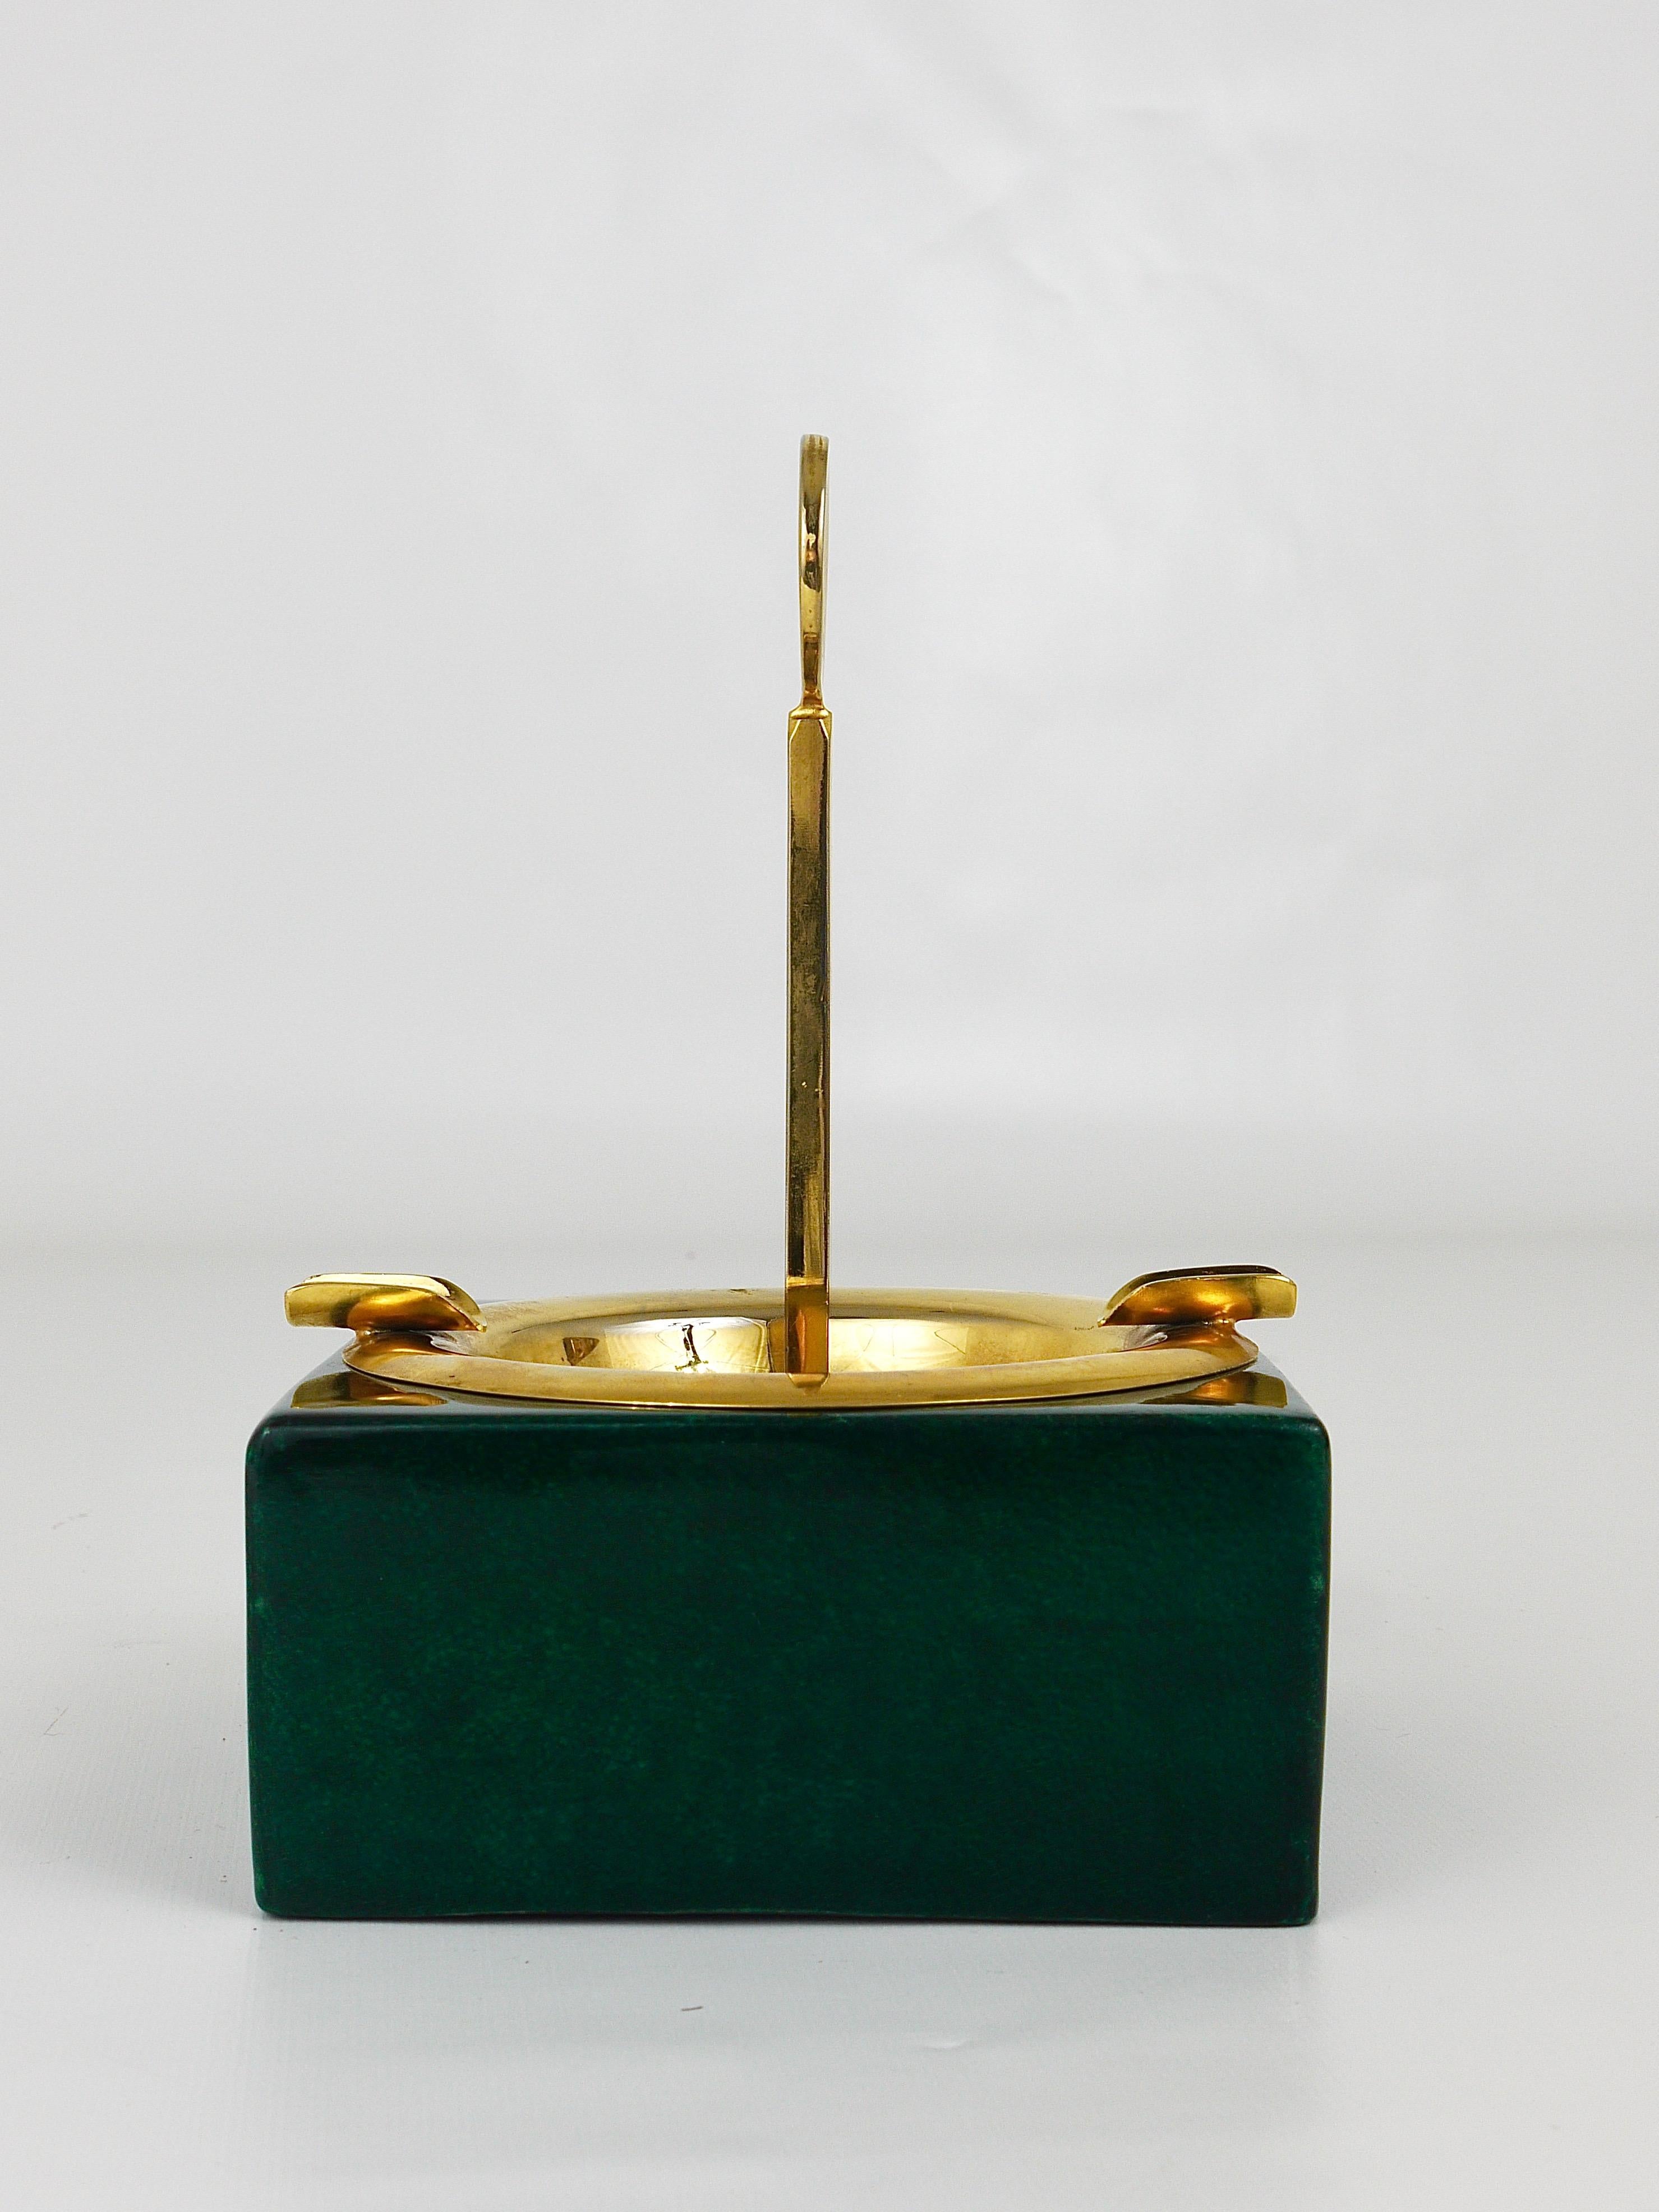 Green Aldo Tura Goatskin Brass Midcentury Ashtray with Handle, Italy, 1970s 1